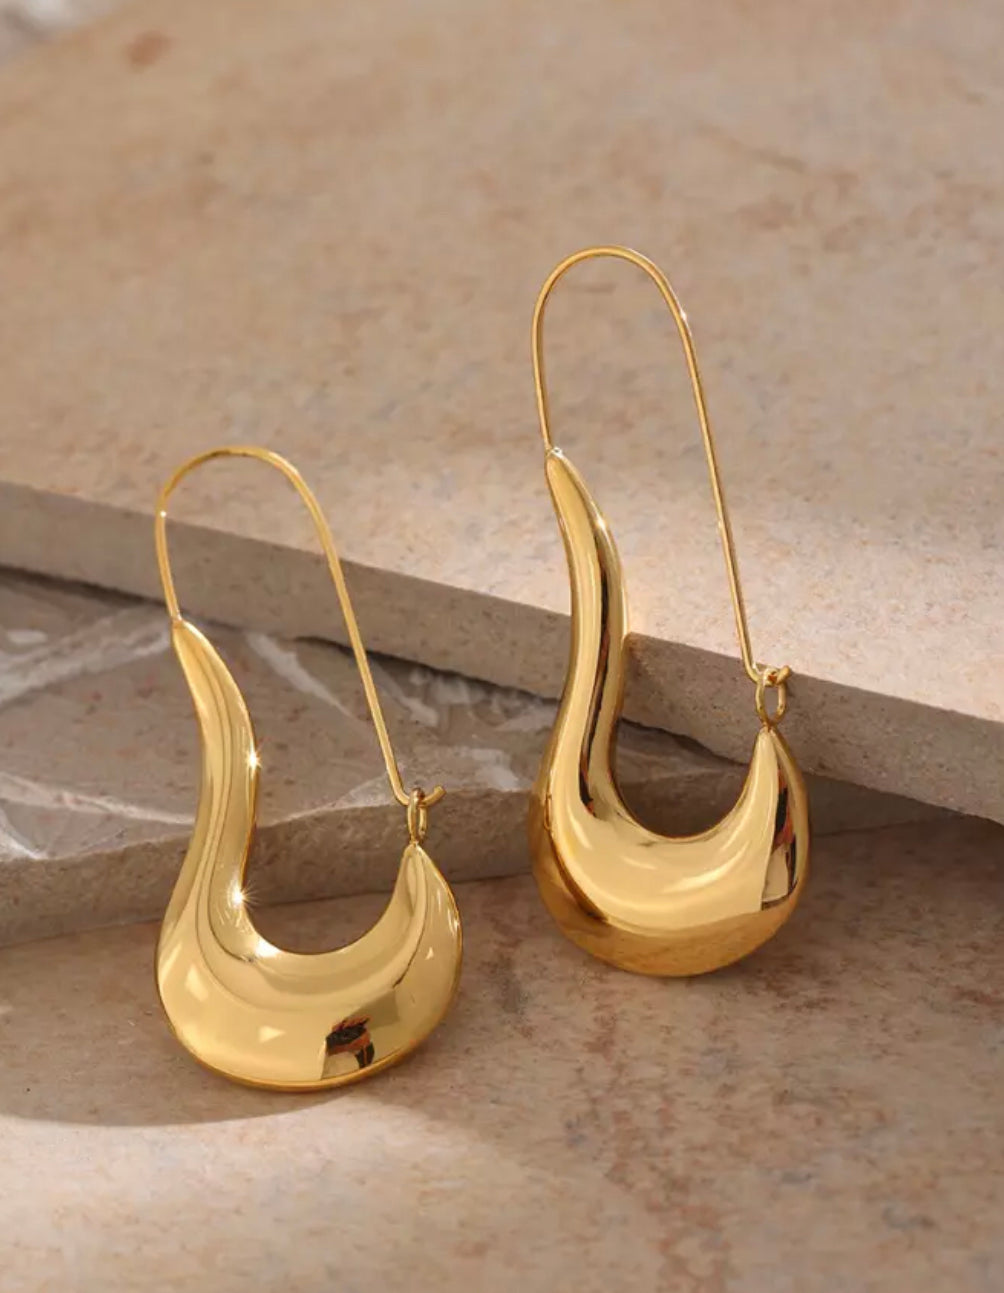 Gold Jumbo Safety Pin Earrings